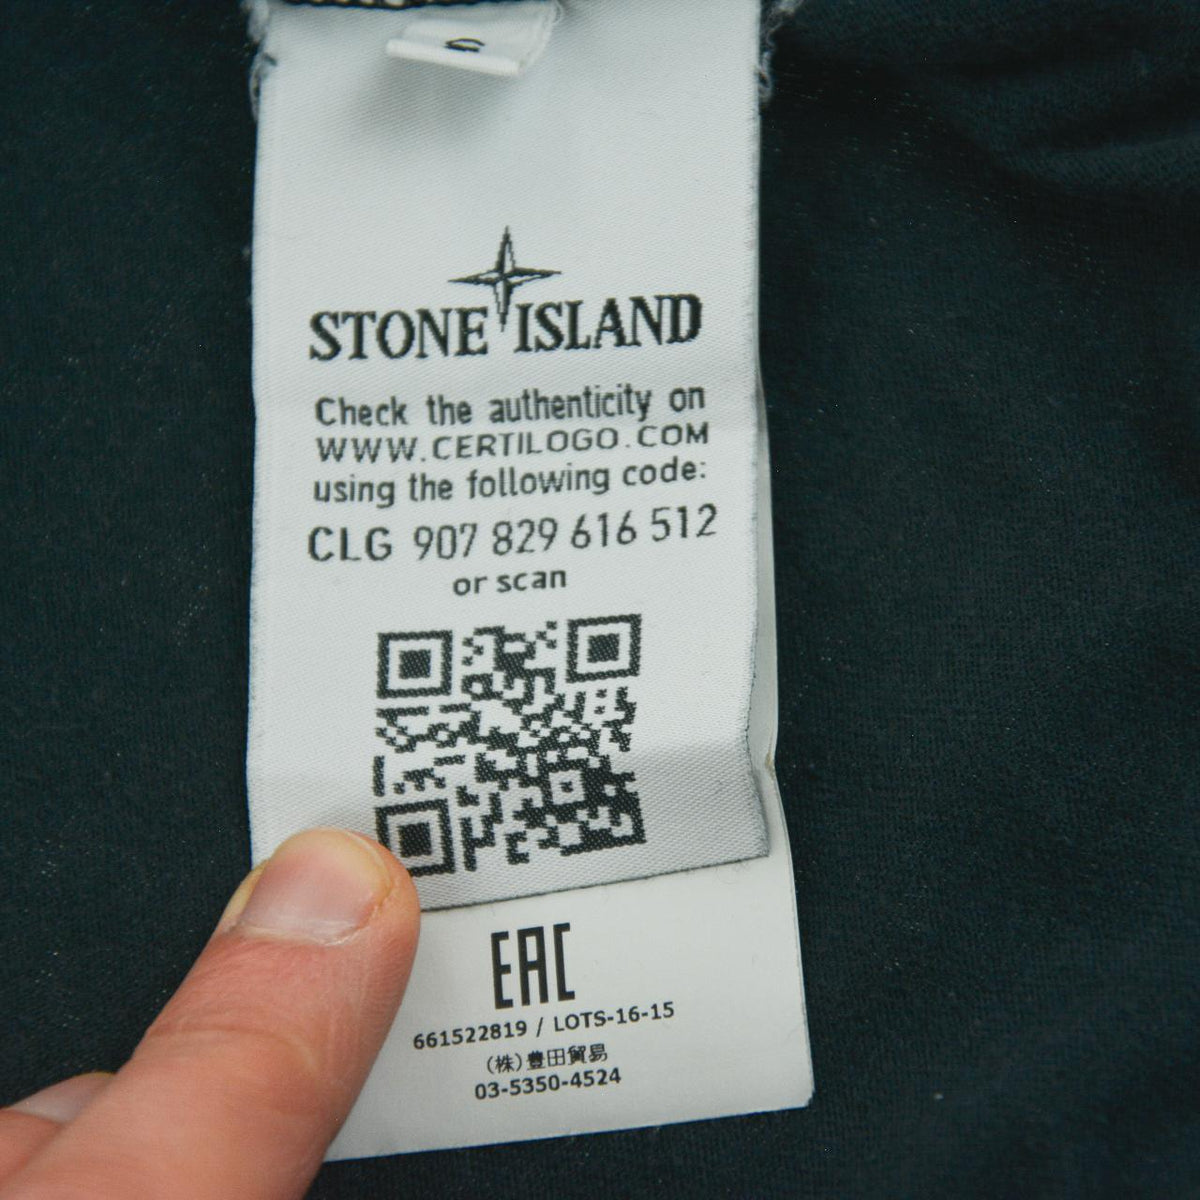 Vintage Stone Island Long Sleeve T Shirt Size S